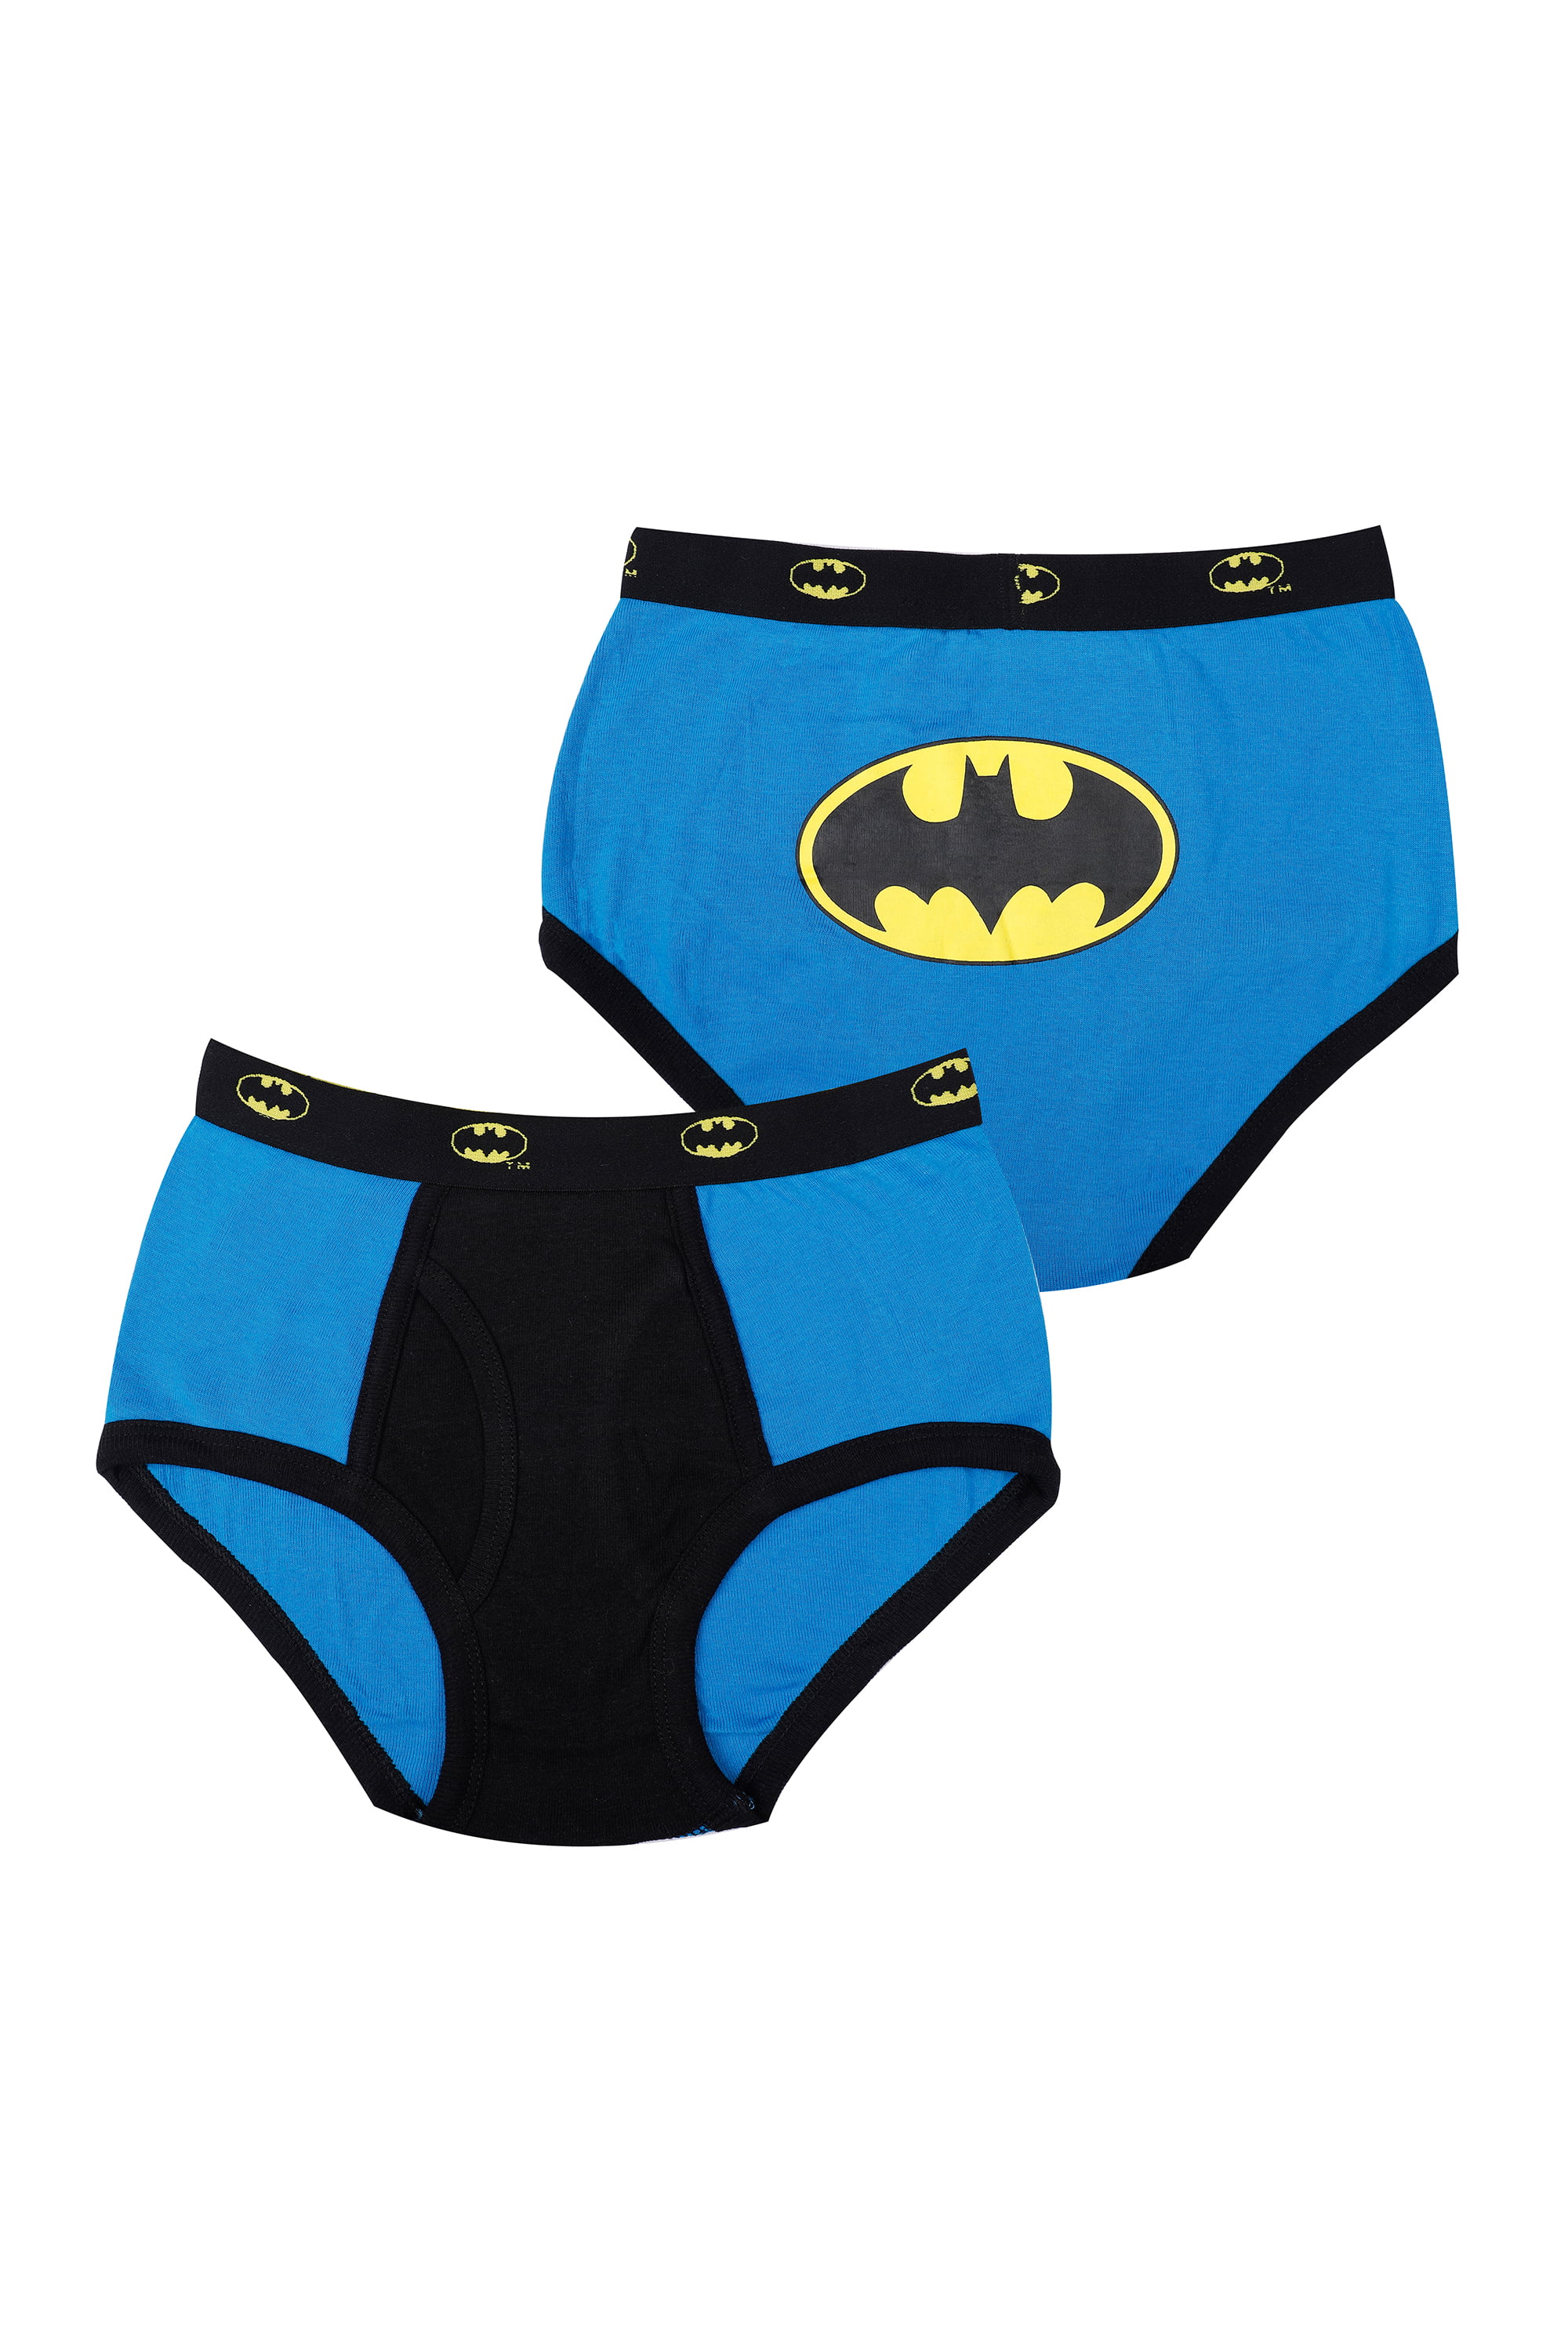 DC Comics Boys Justice League Batman Brief Underwear Pack, Multi, 4T/5T